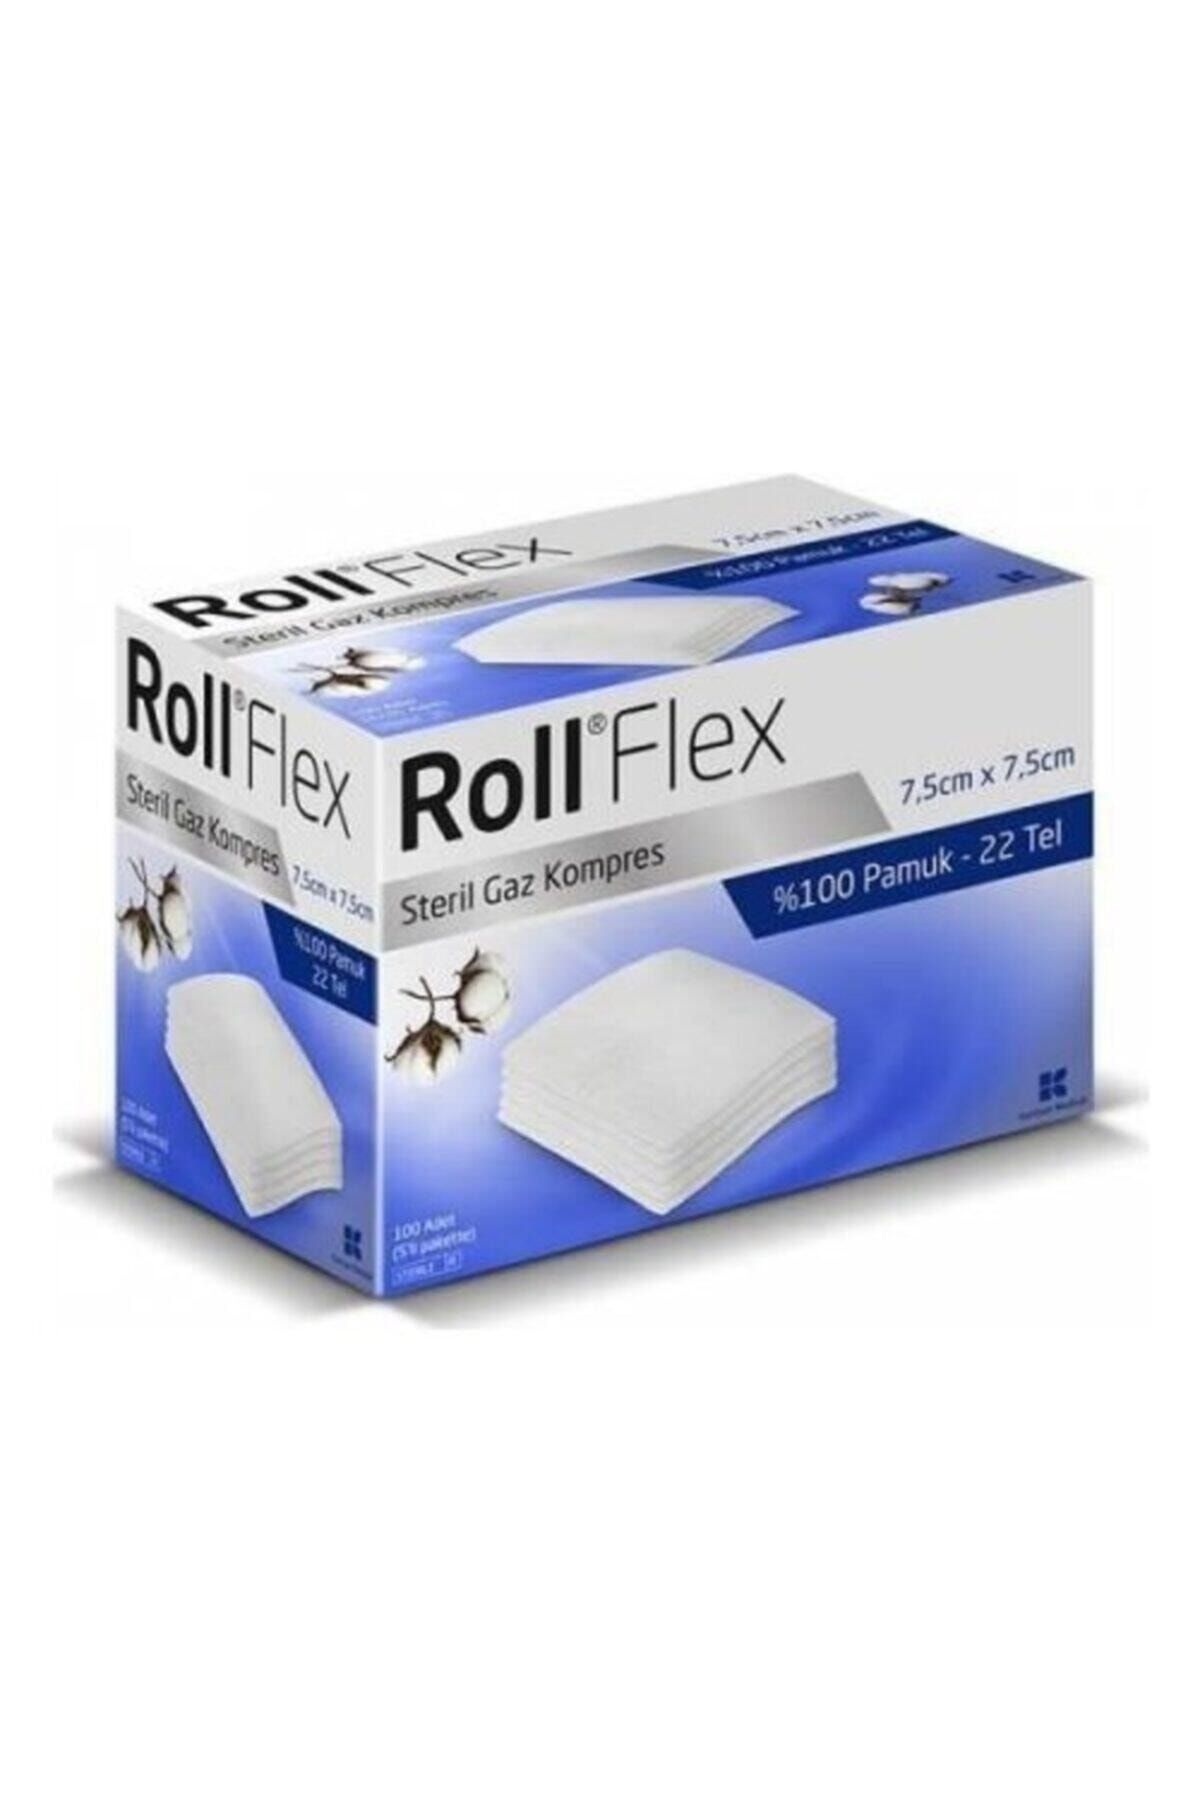 Roll Flex Steril Gaz Kompres, %100 Pamuk, 100'lü 5'li Paket